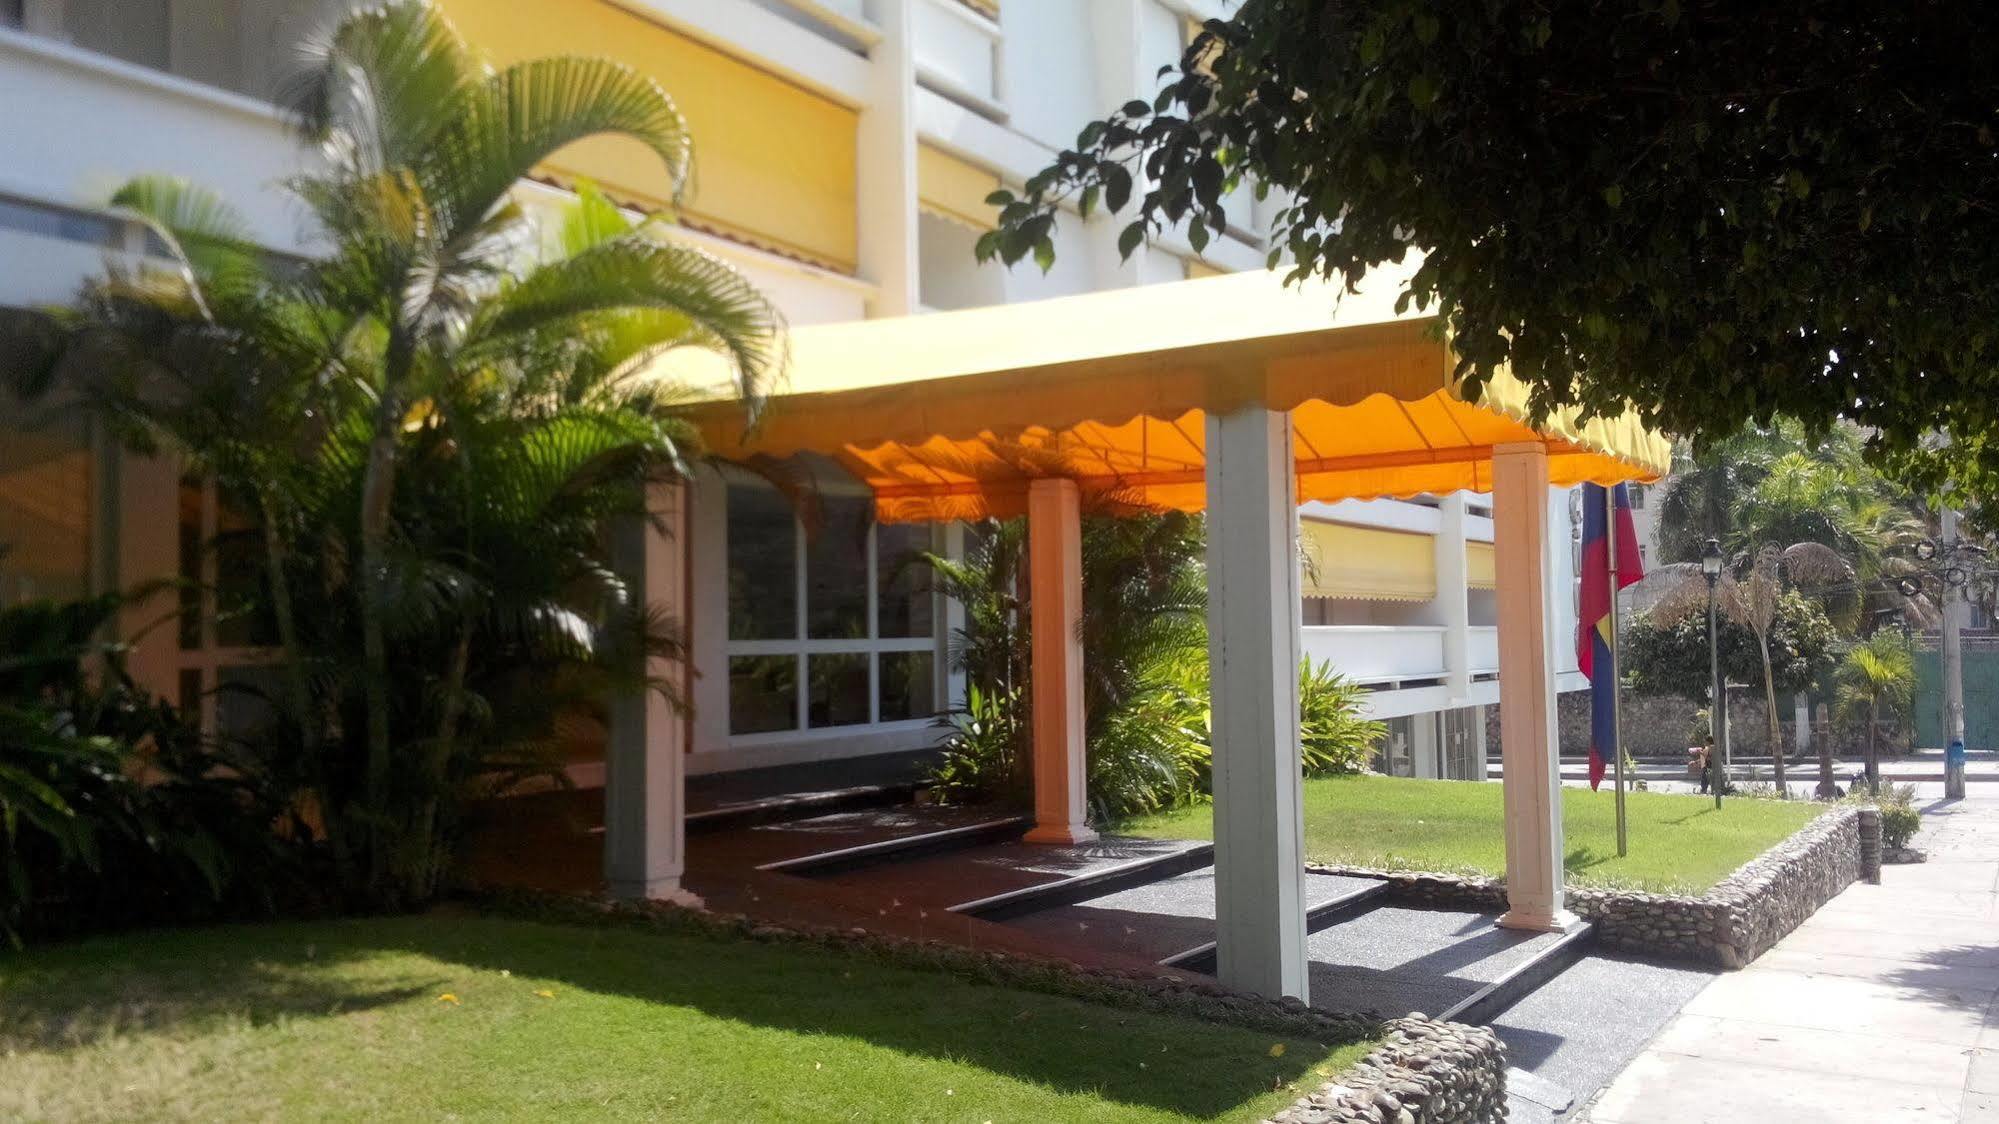 Vallclaire Suites Barranquilla  Exterior photo